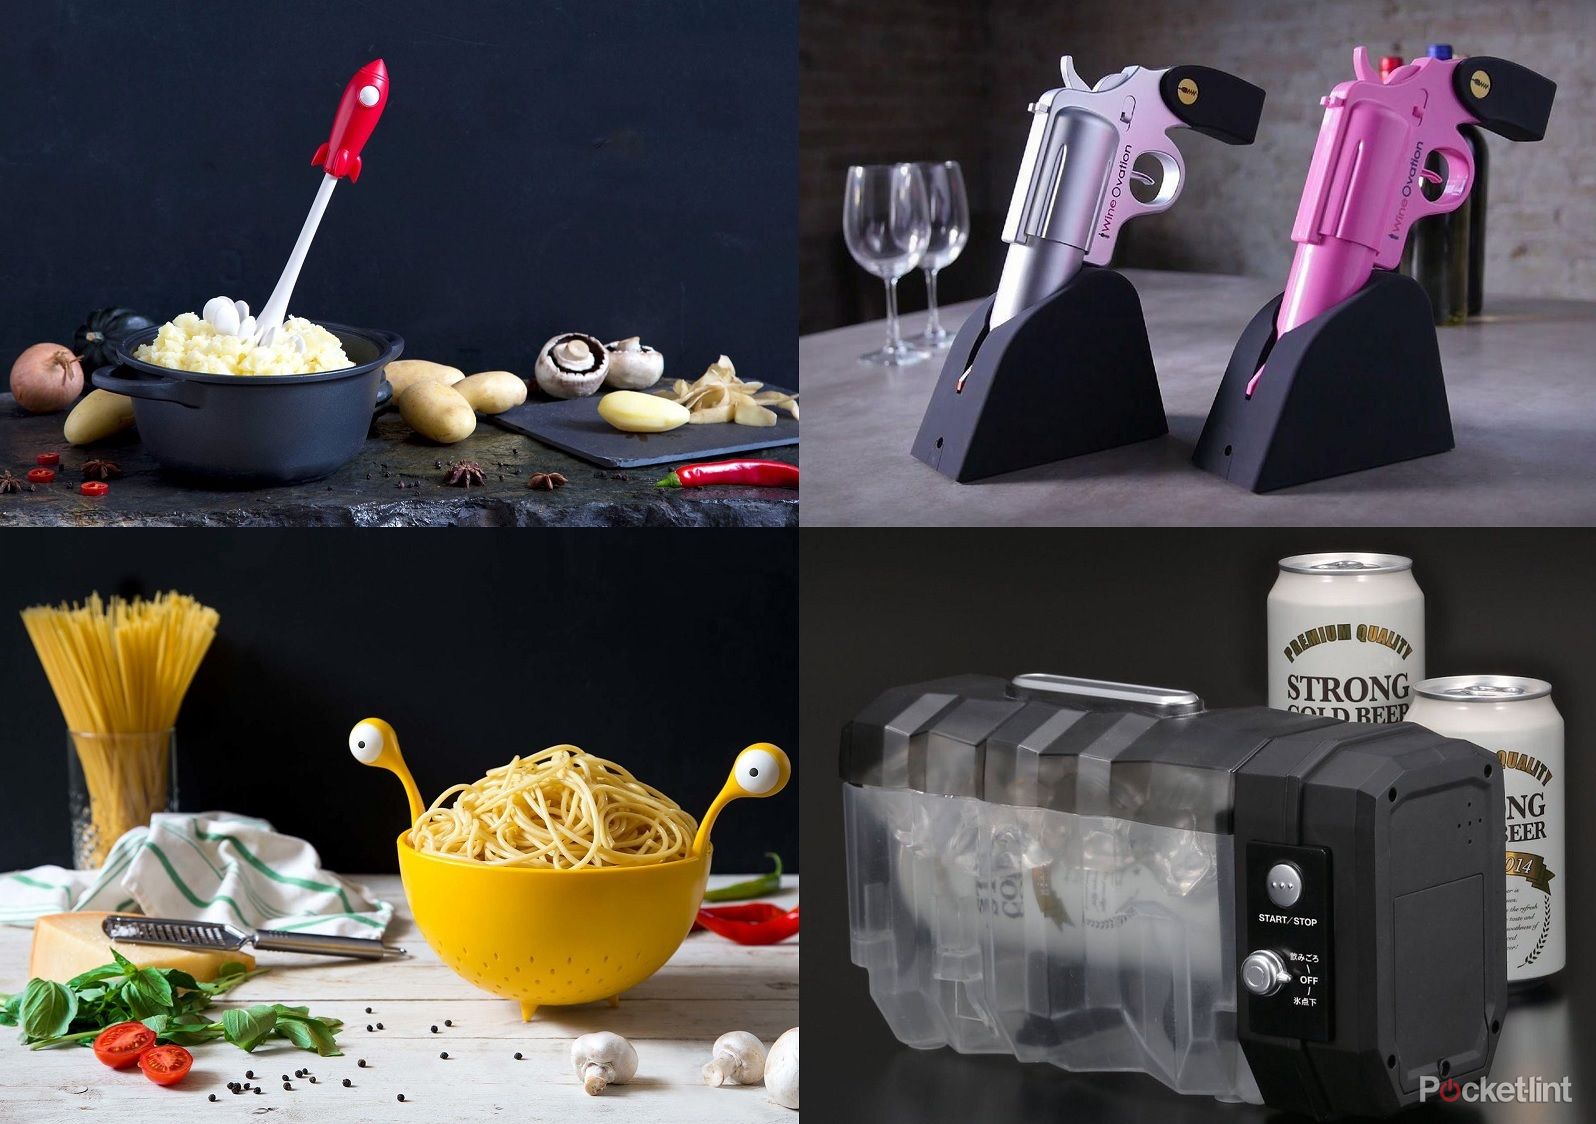 47 Geeky kitchen gadgets that every nerd needs